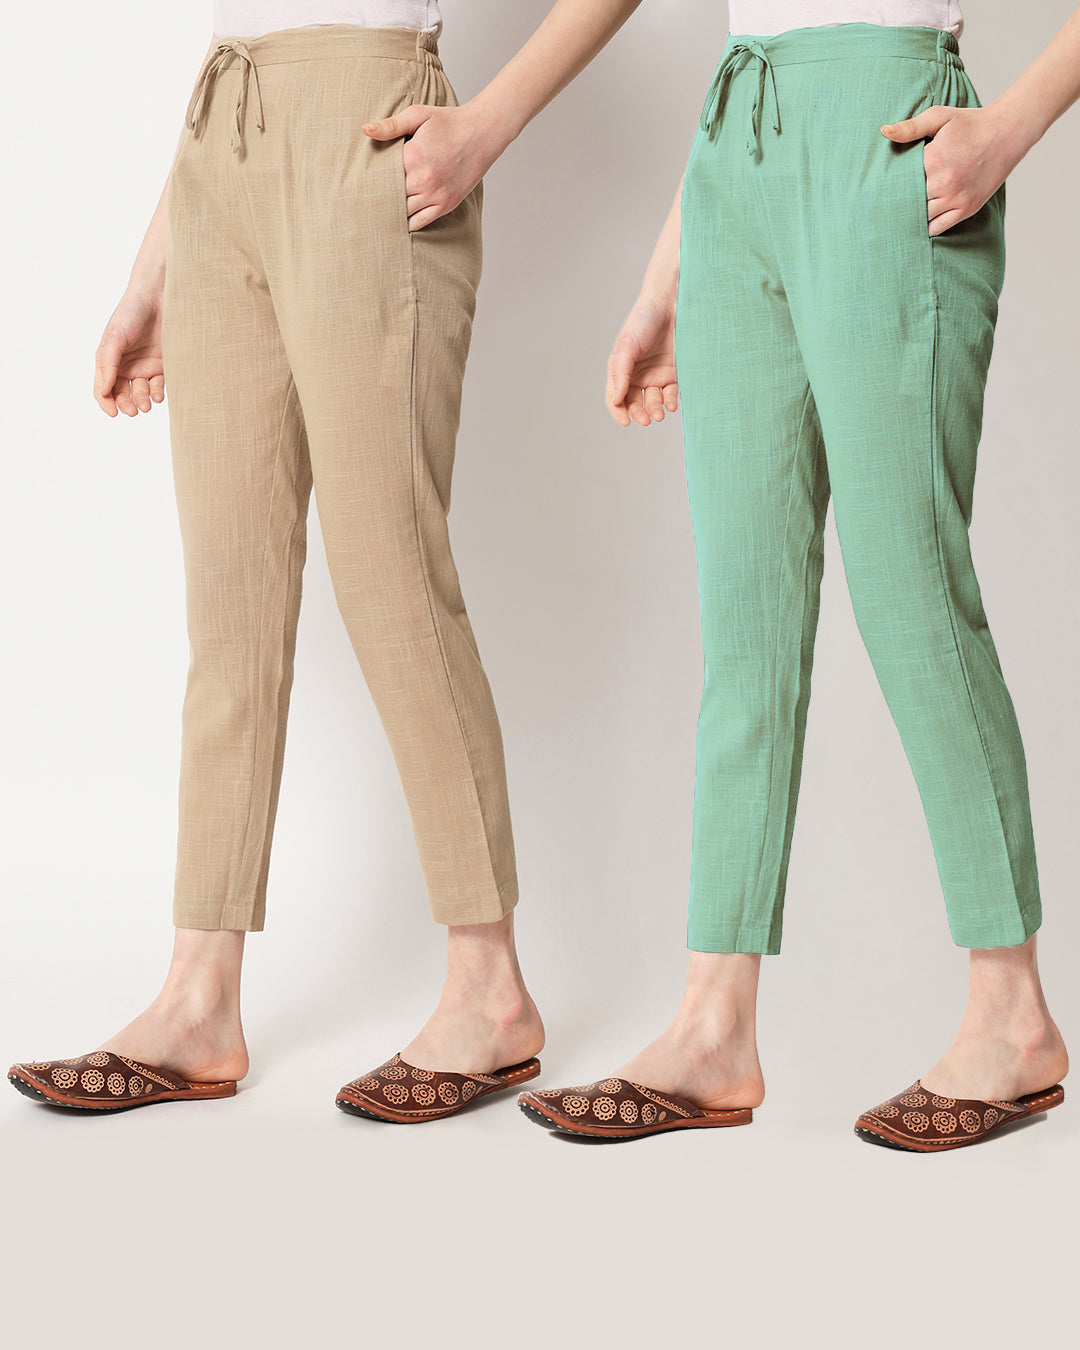 Combo: Beige & Easy Green Cigarette Pants- Set of 2